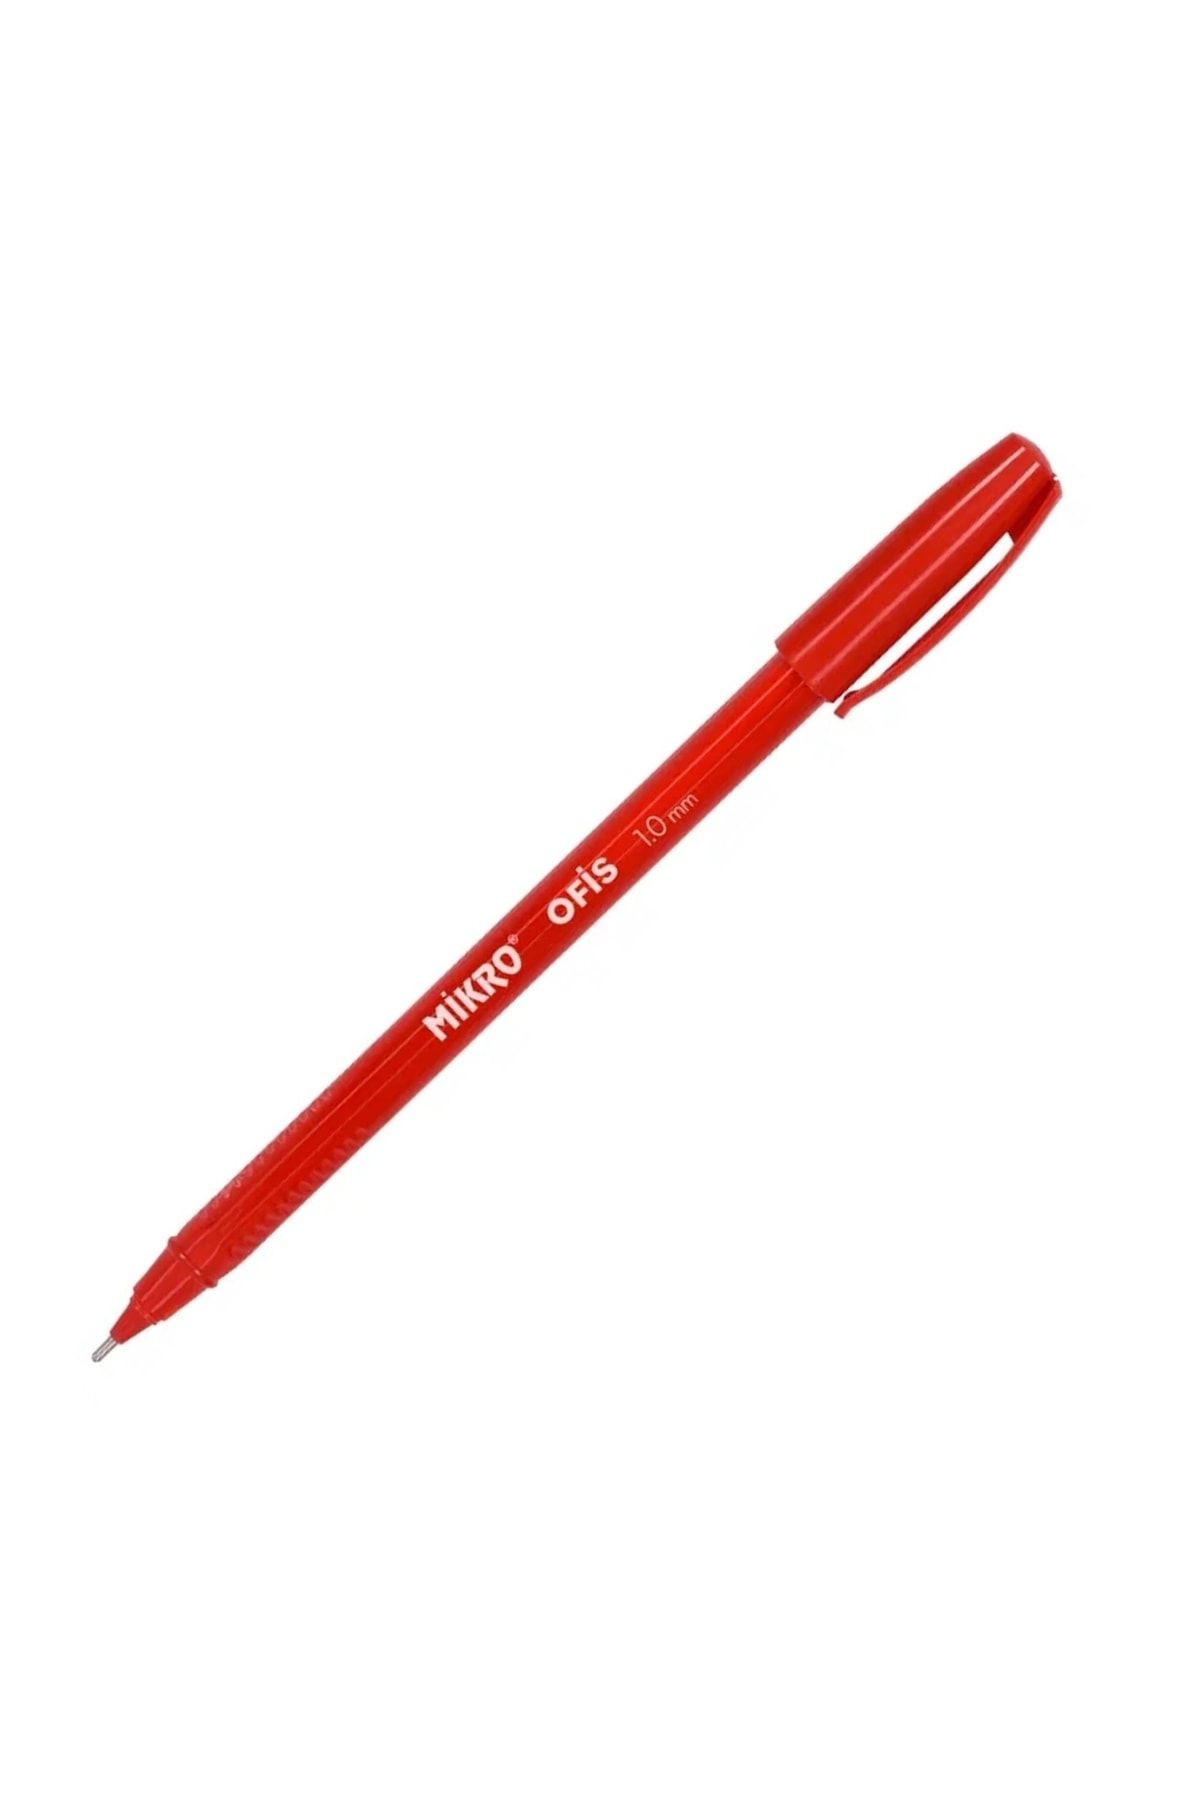 Mikro M-40 Tükenmez Kalem 1.0 Mm Kırmızı 1 Adet